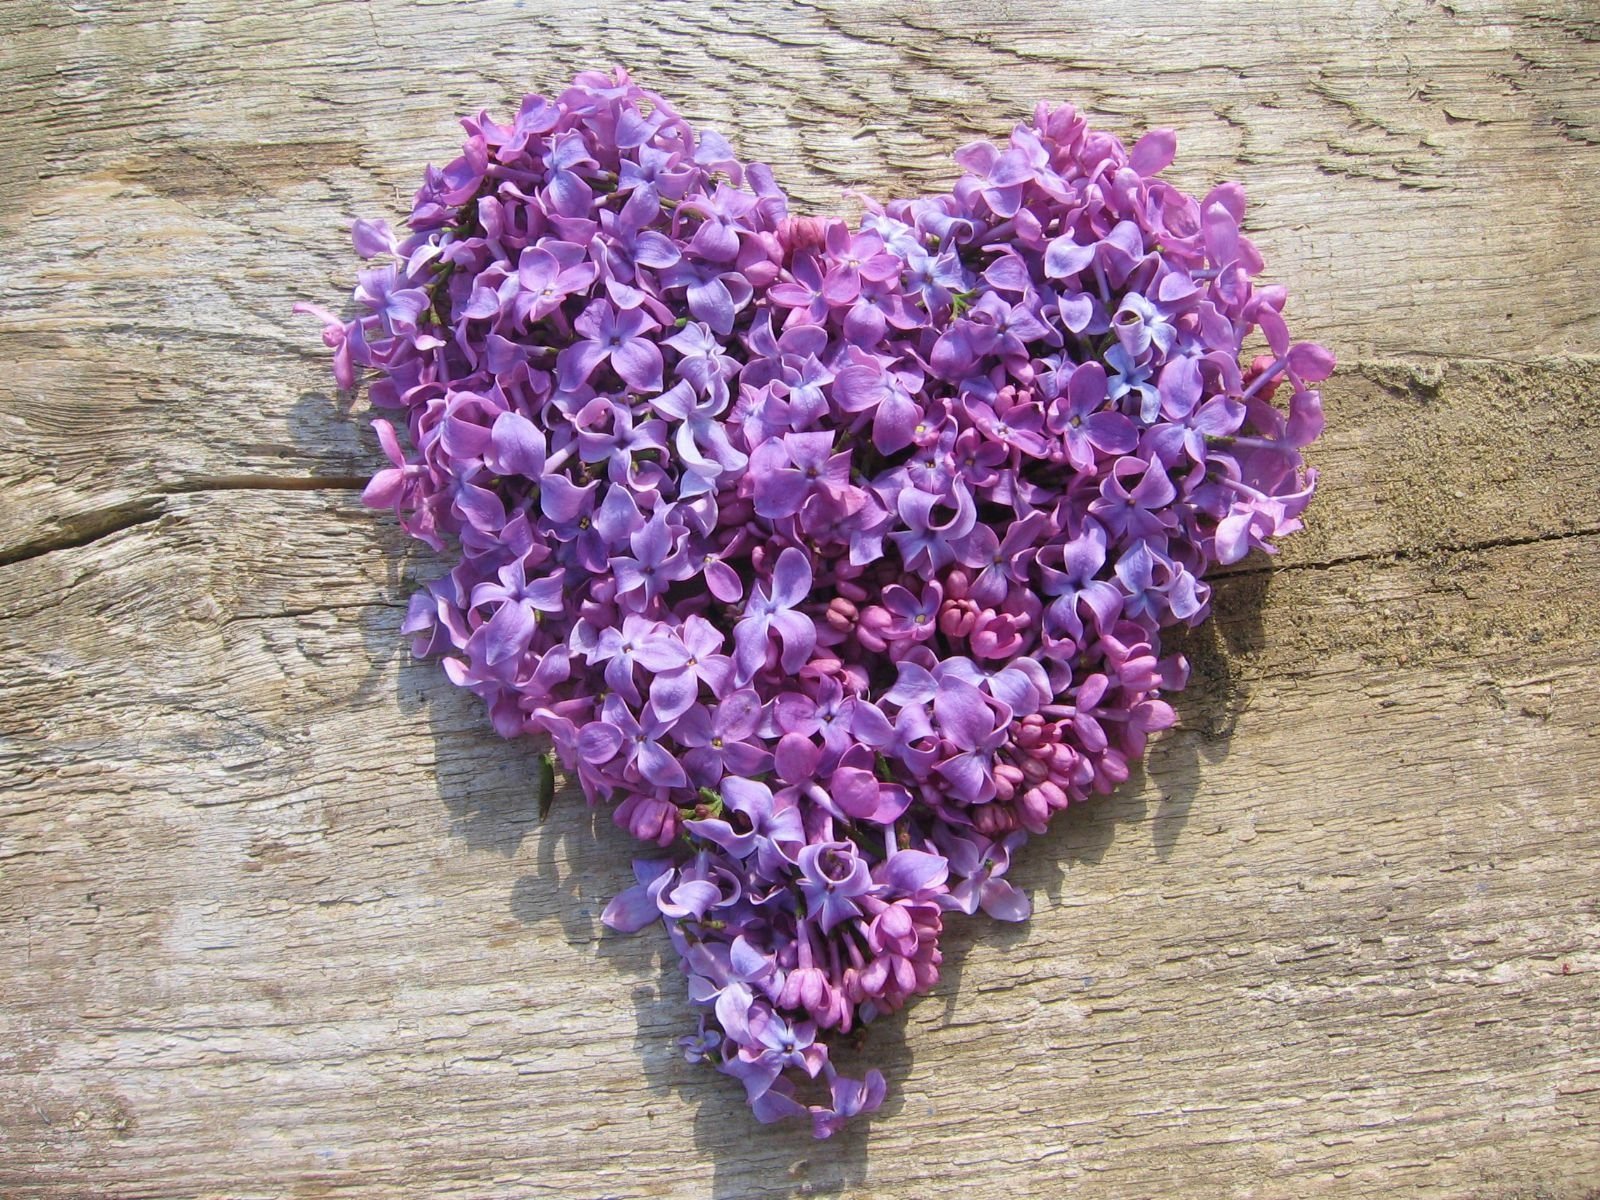 фото фиолетового сердечка